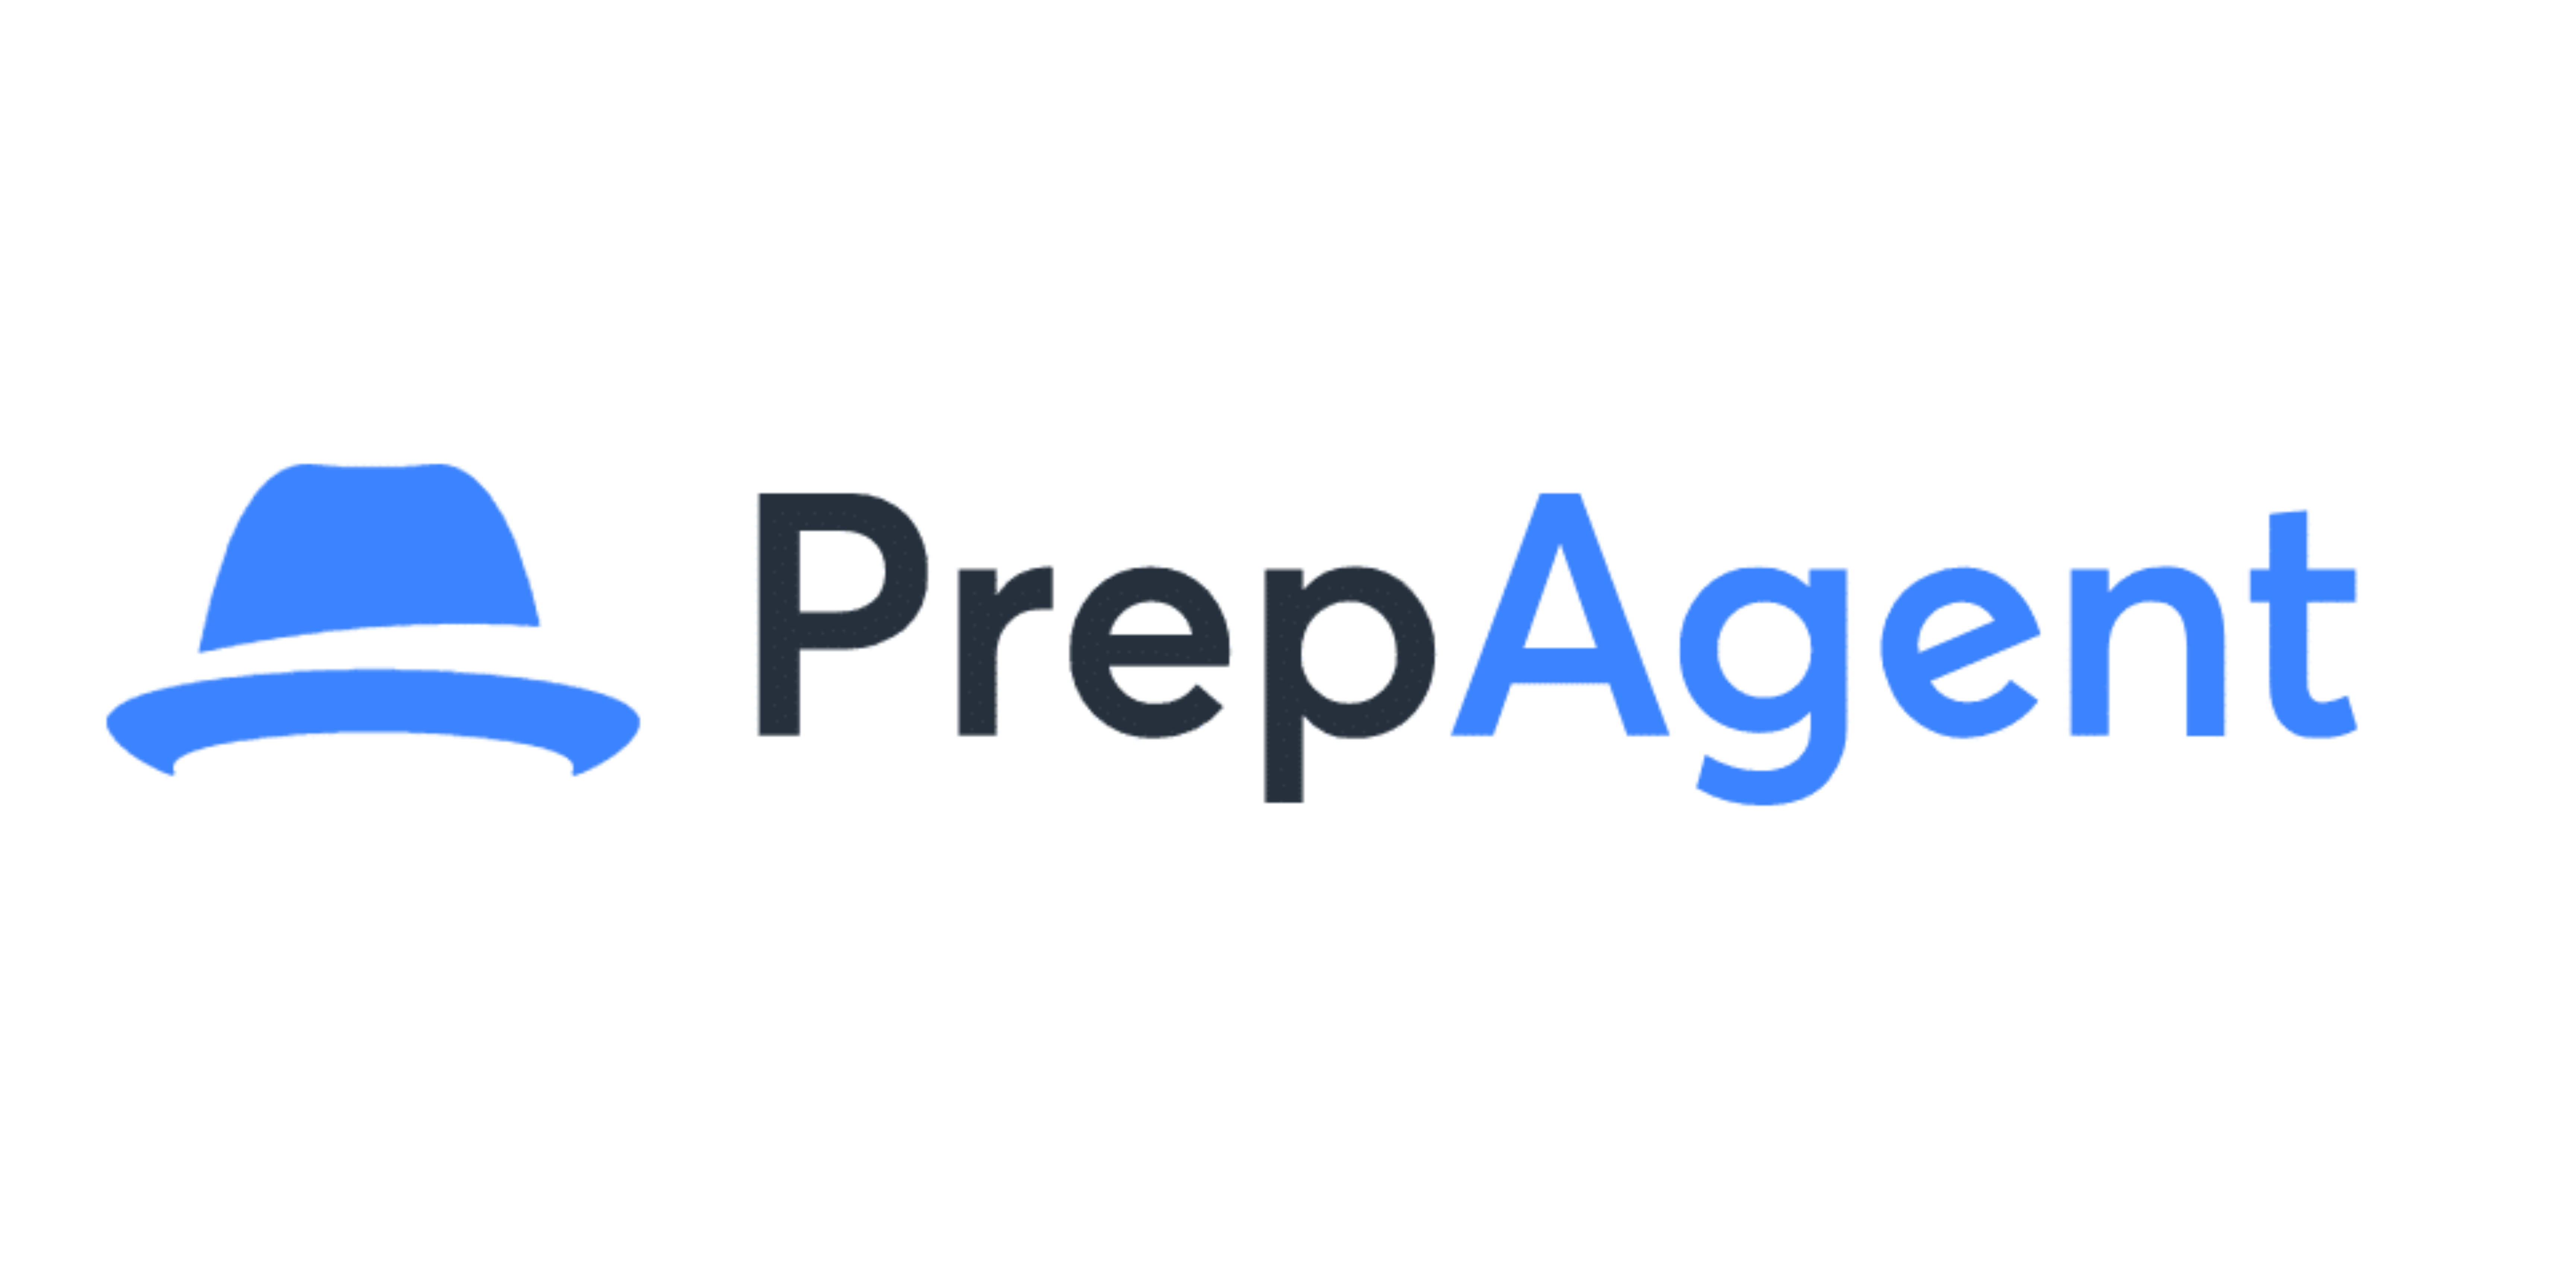 PrepAgent Logo